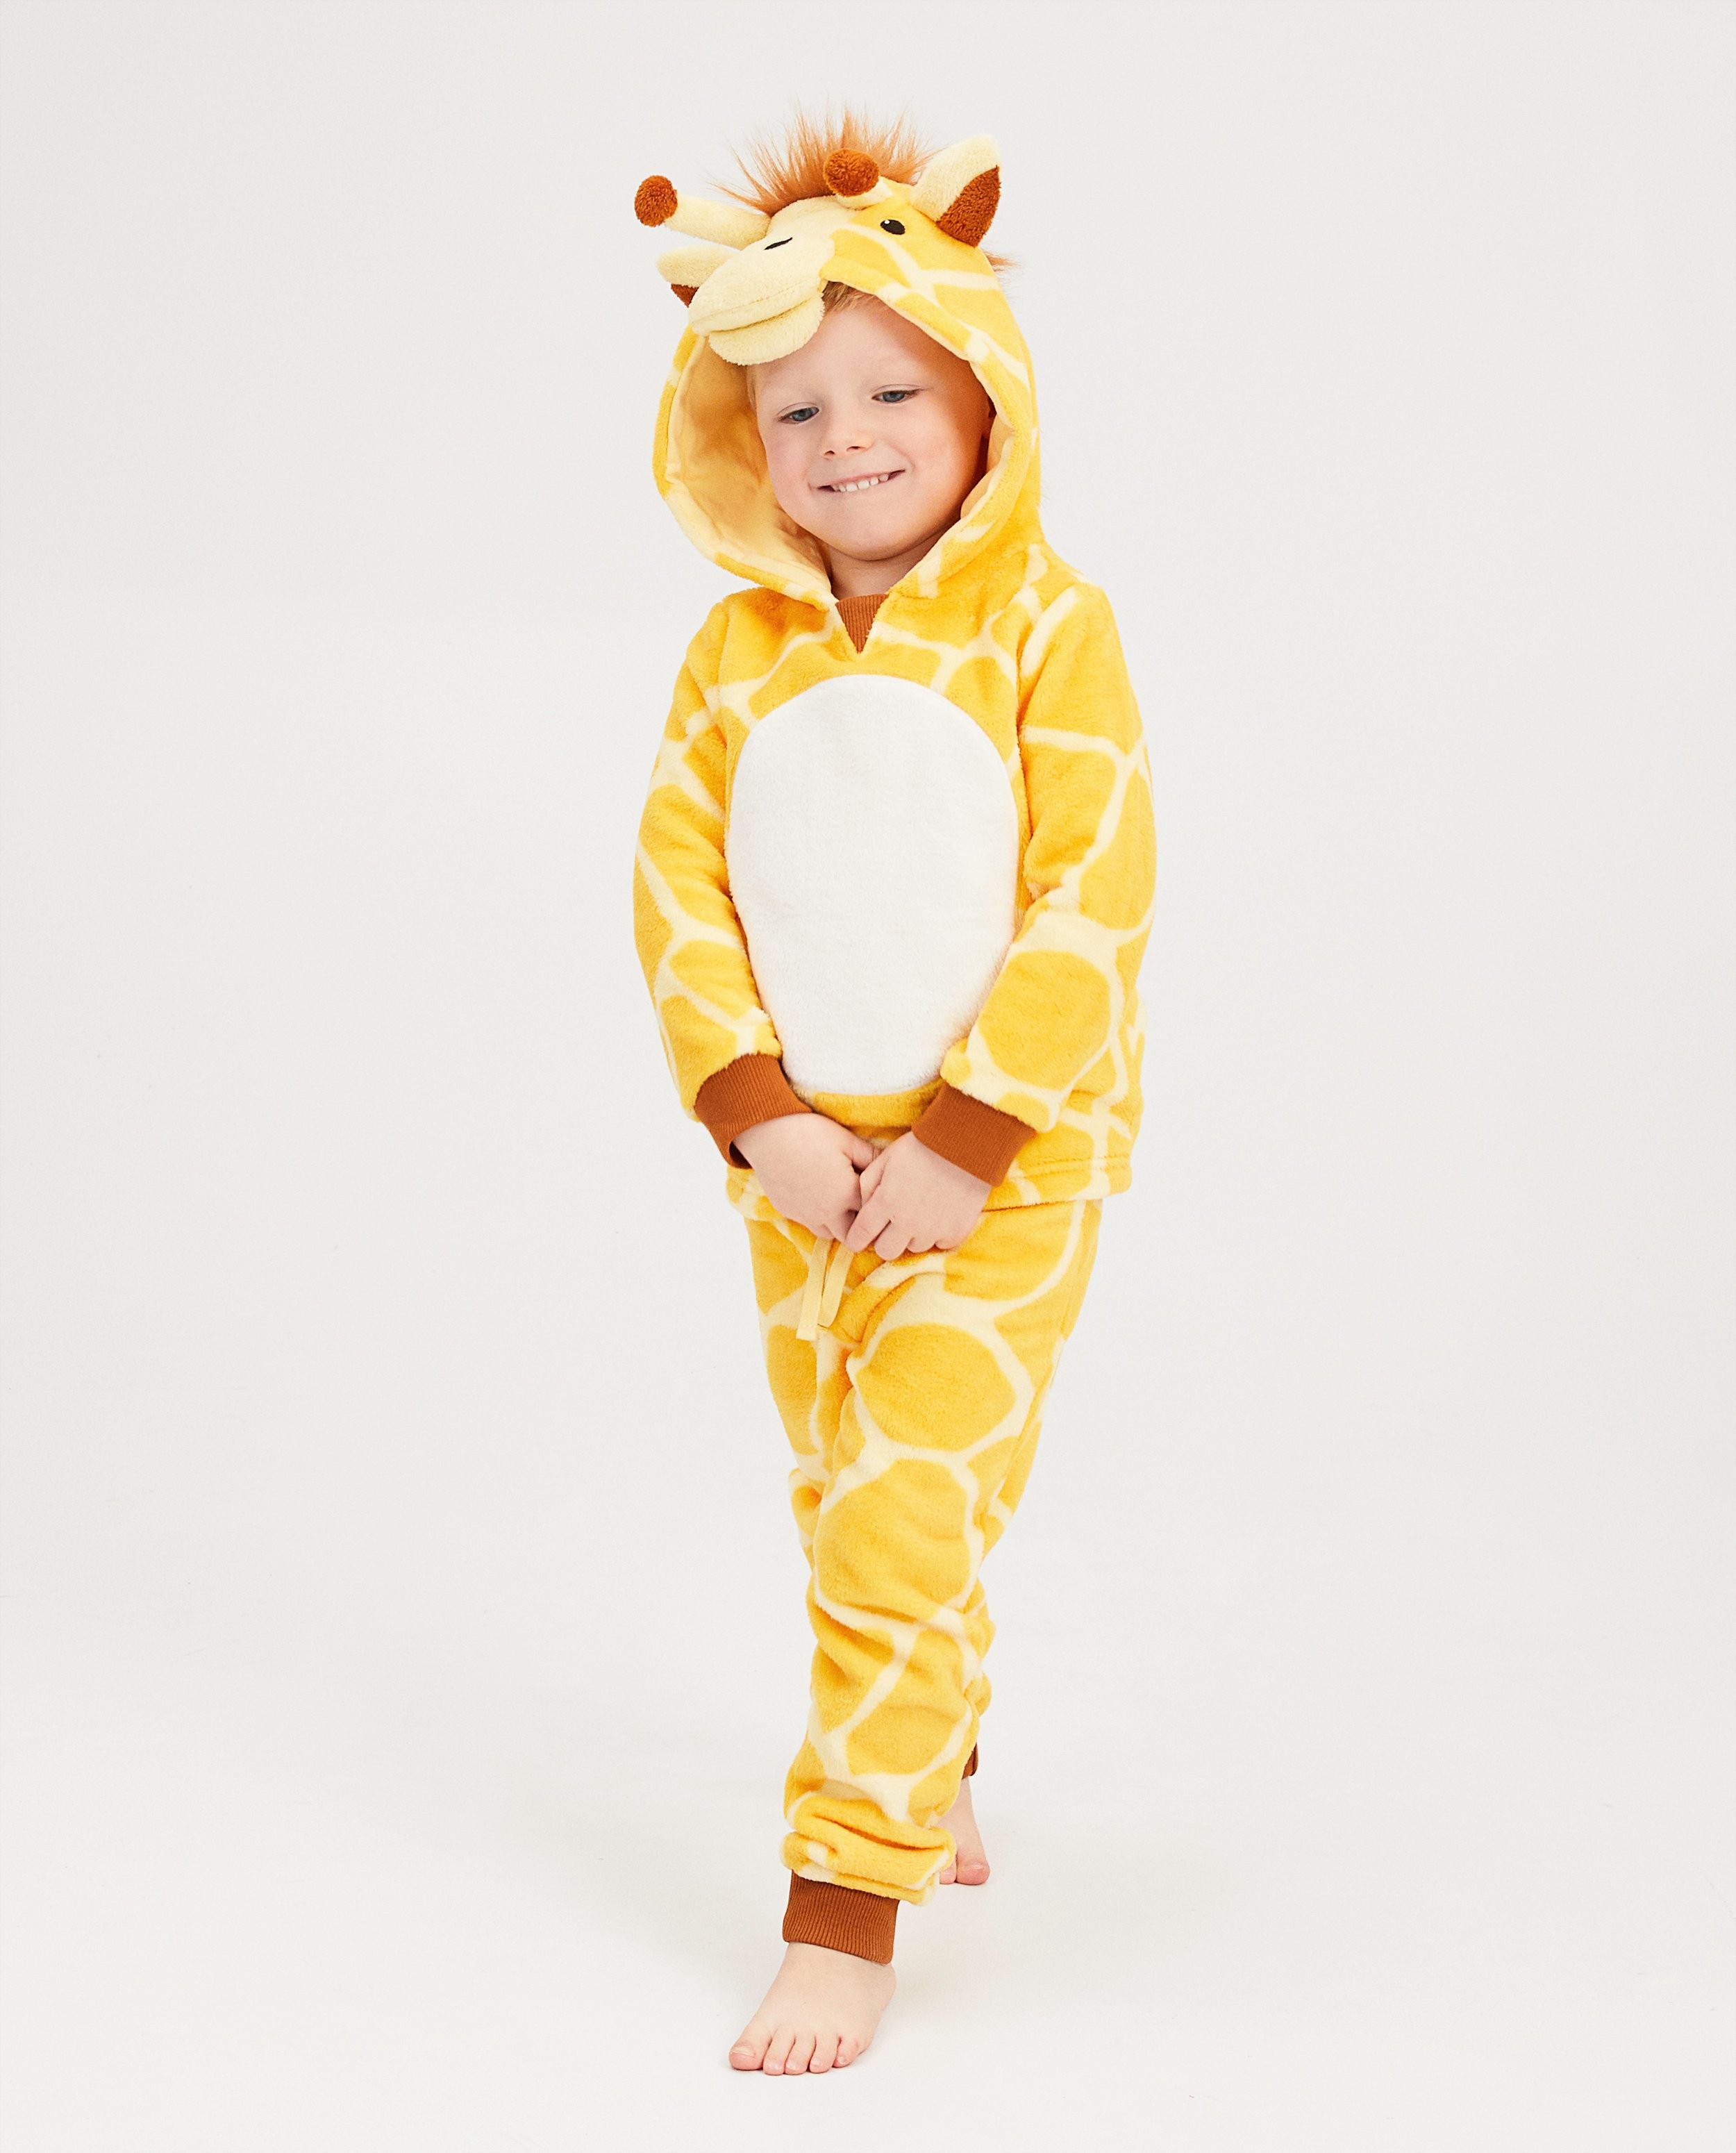 Ruwe olie Tot stand brengen Rommelig Dierenpak 'giraf' pyjama Kidz Nation | JBC België België